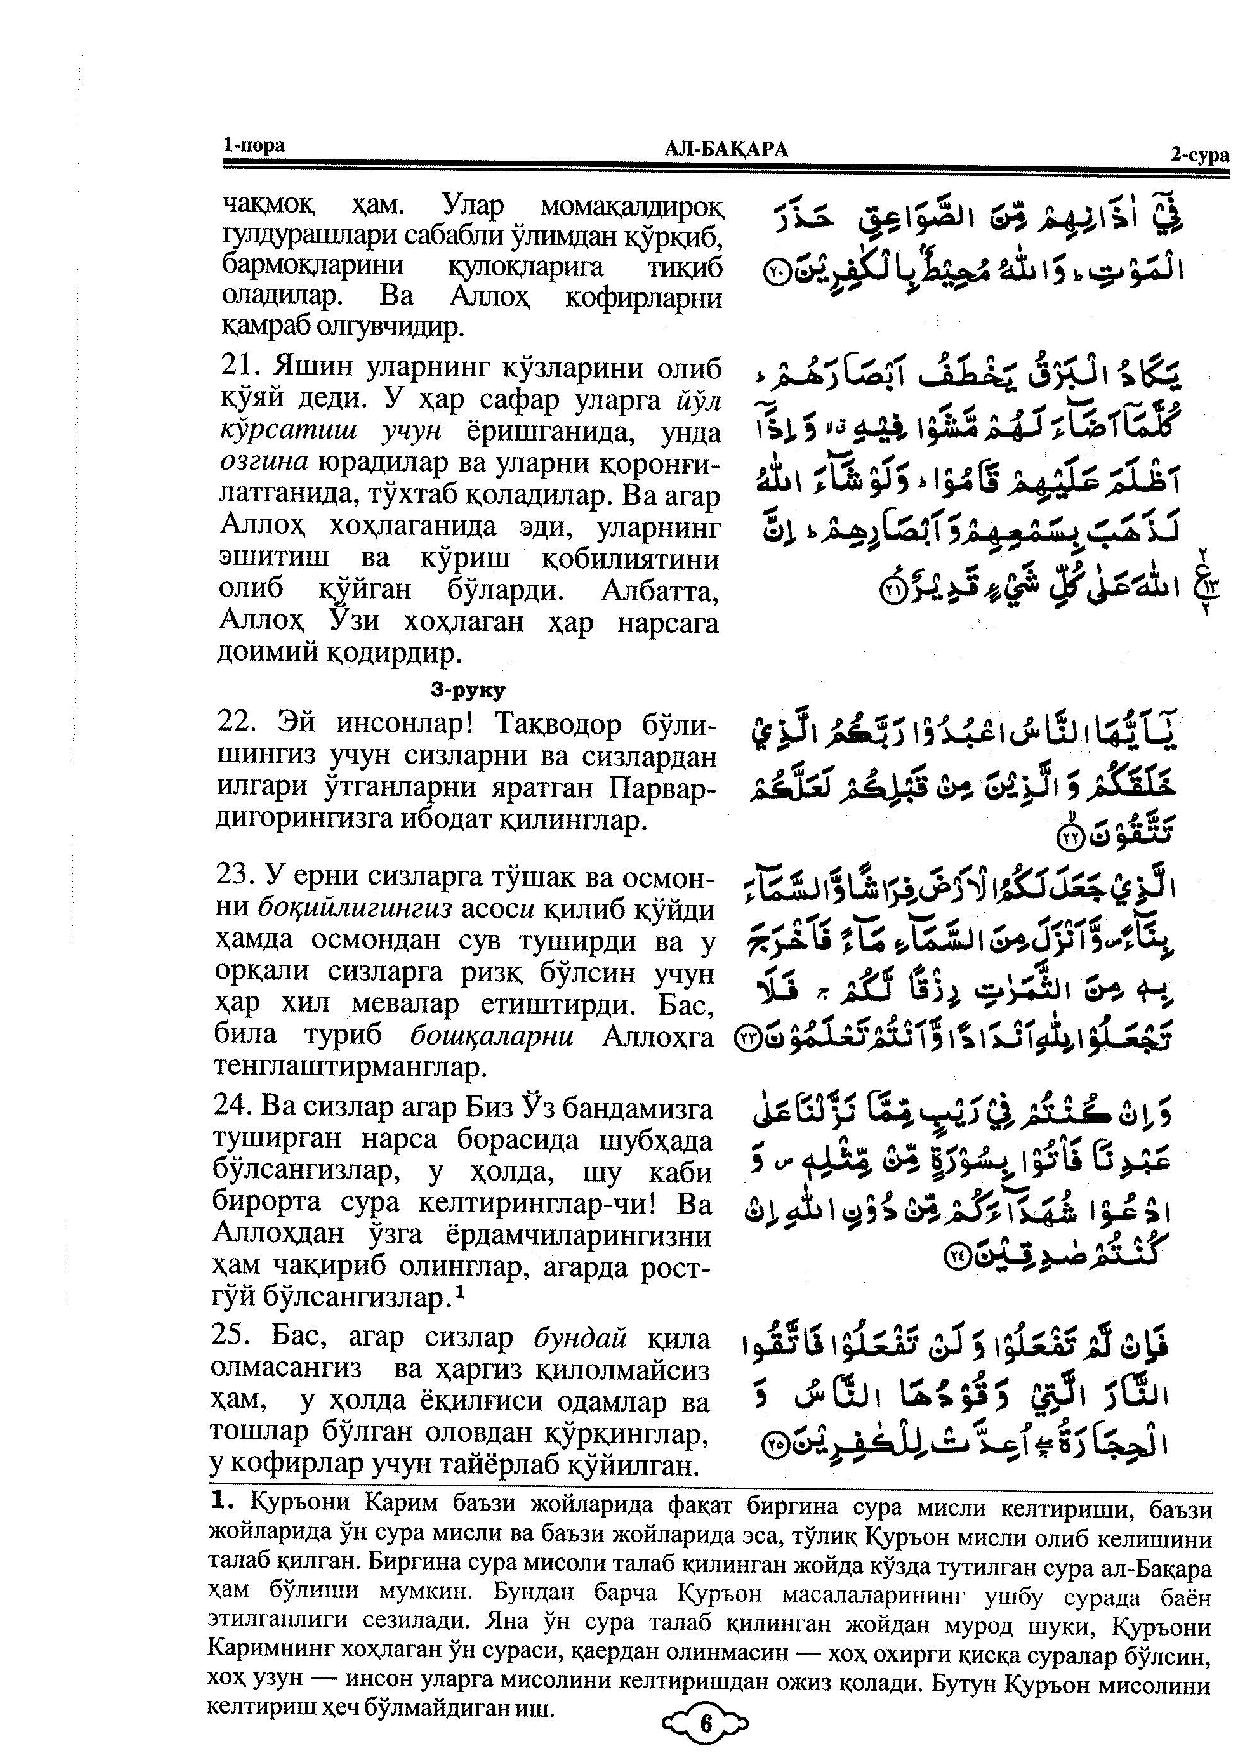 002-al-baqarah-page-004